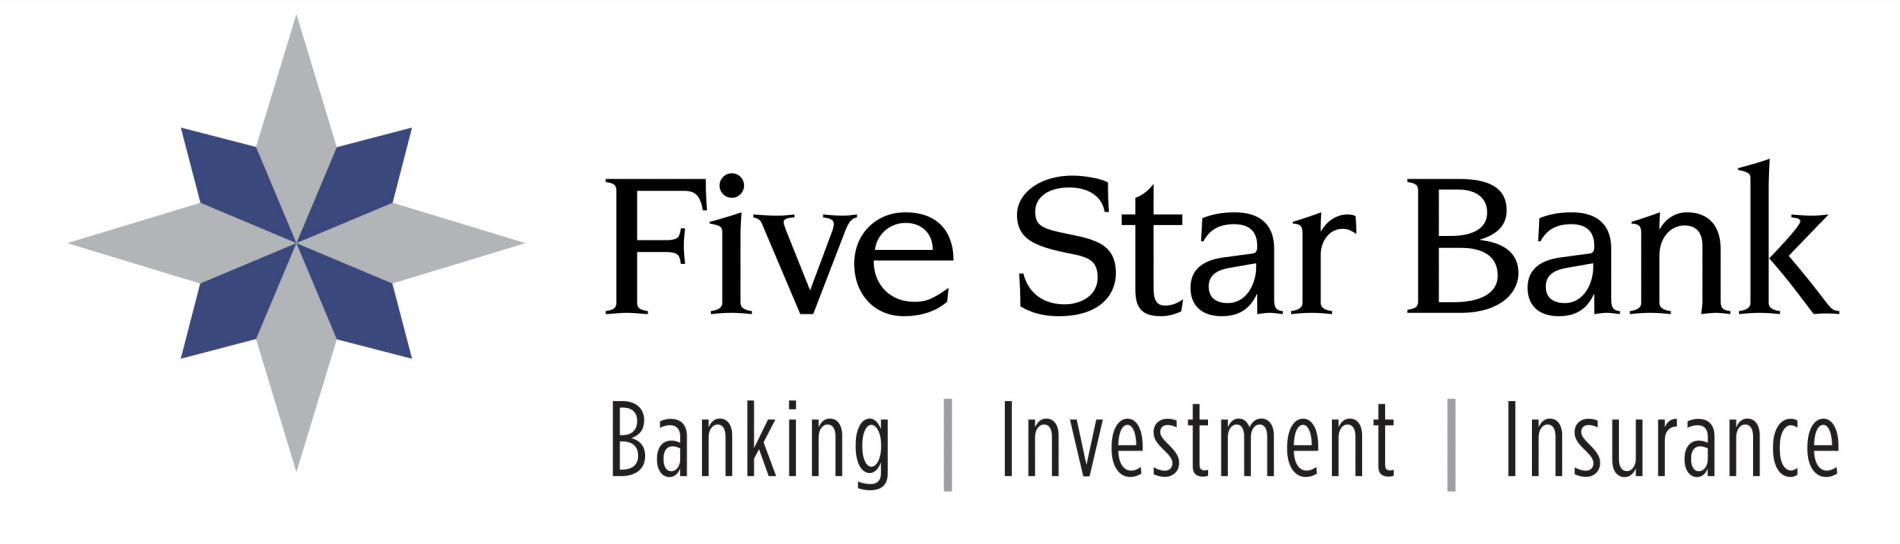 five star bank logo